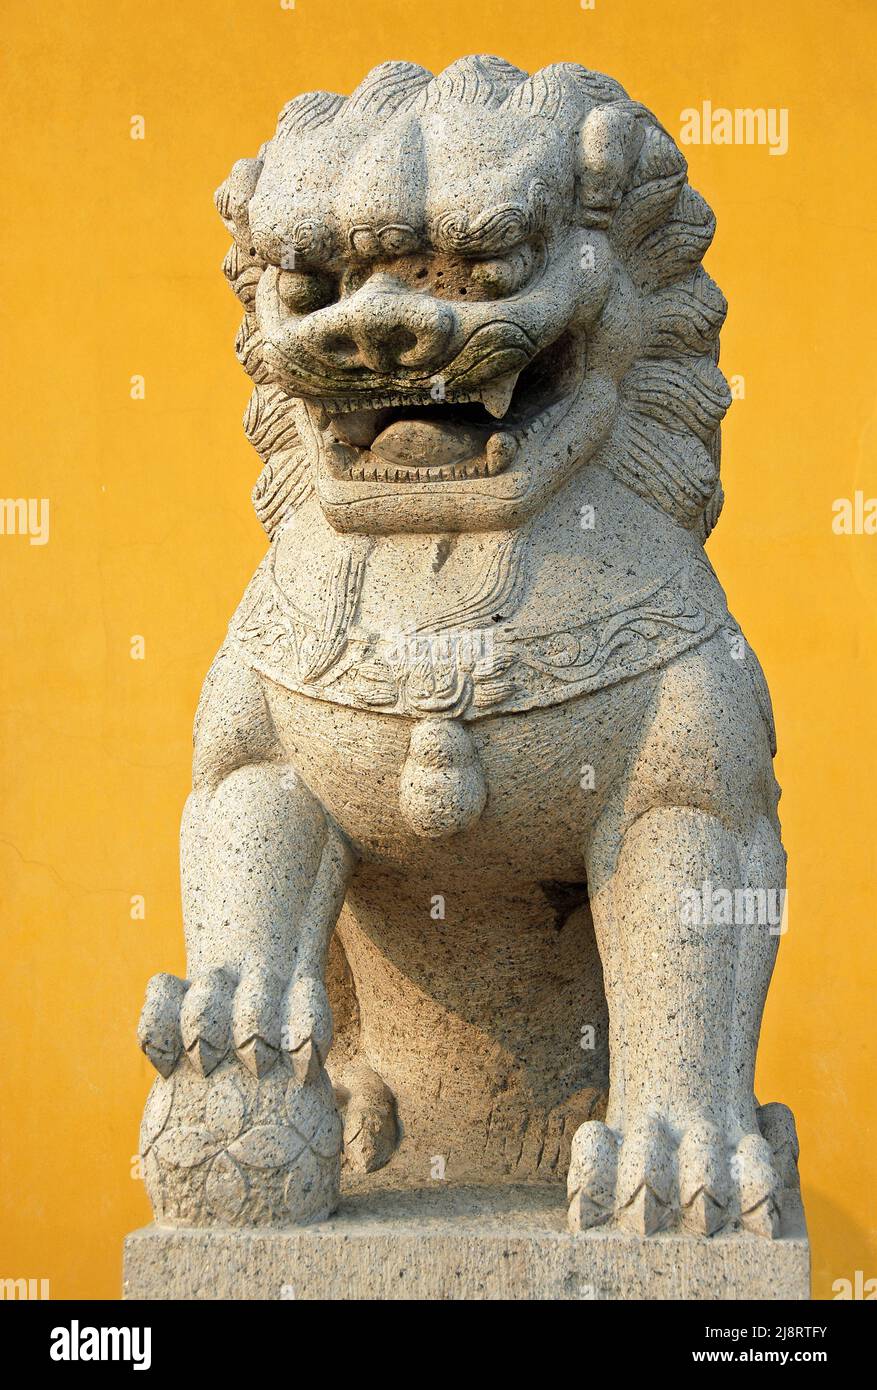 Zhenjiang, Jiangsu Province, China: A traditional Chinese lion statue against a yellow background at Dinghui Temple in Zhenjiang. Stock Photo